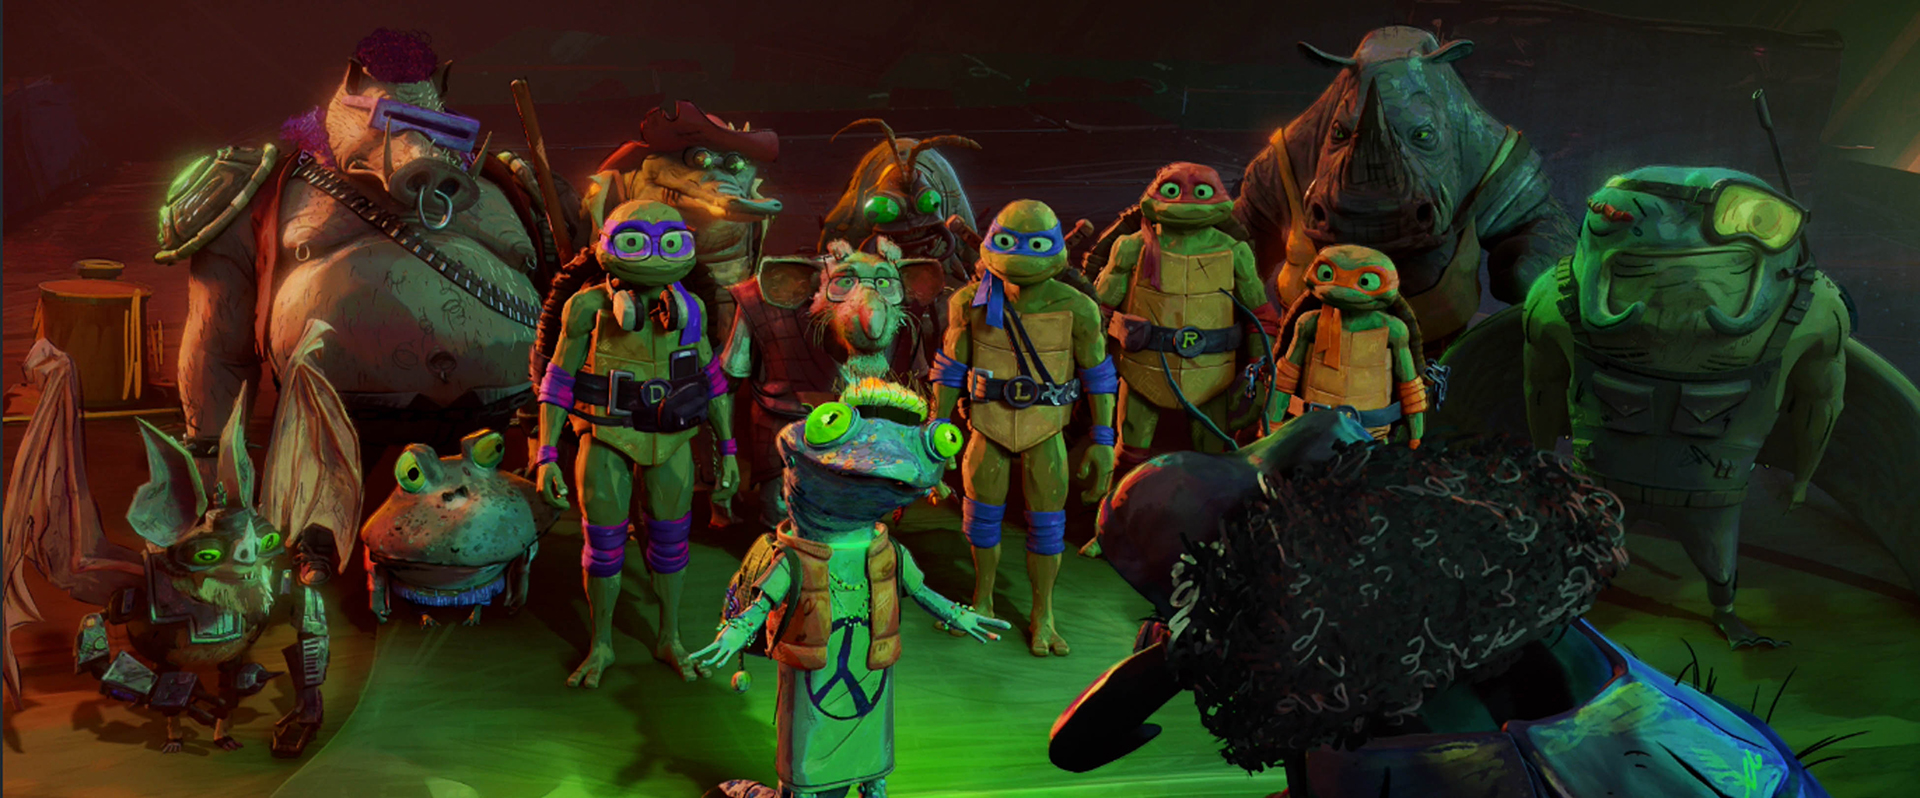 Teenage Mutant Ninja Turtles: Mutant Mayhem review – gloriously